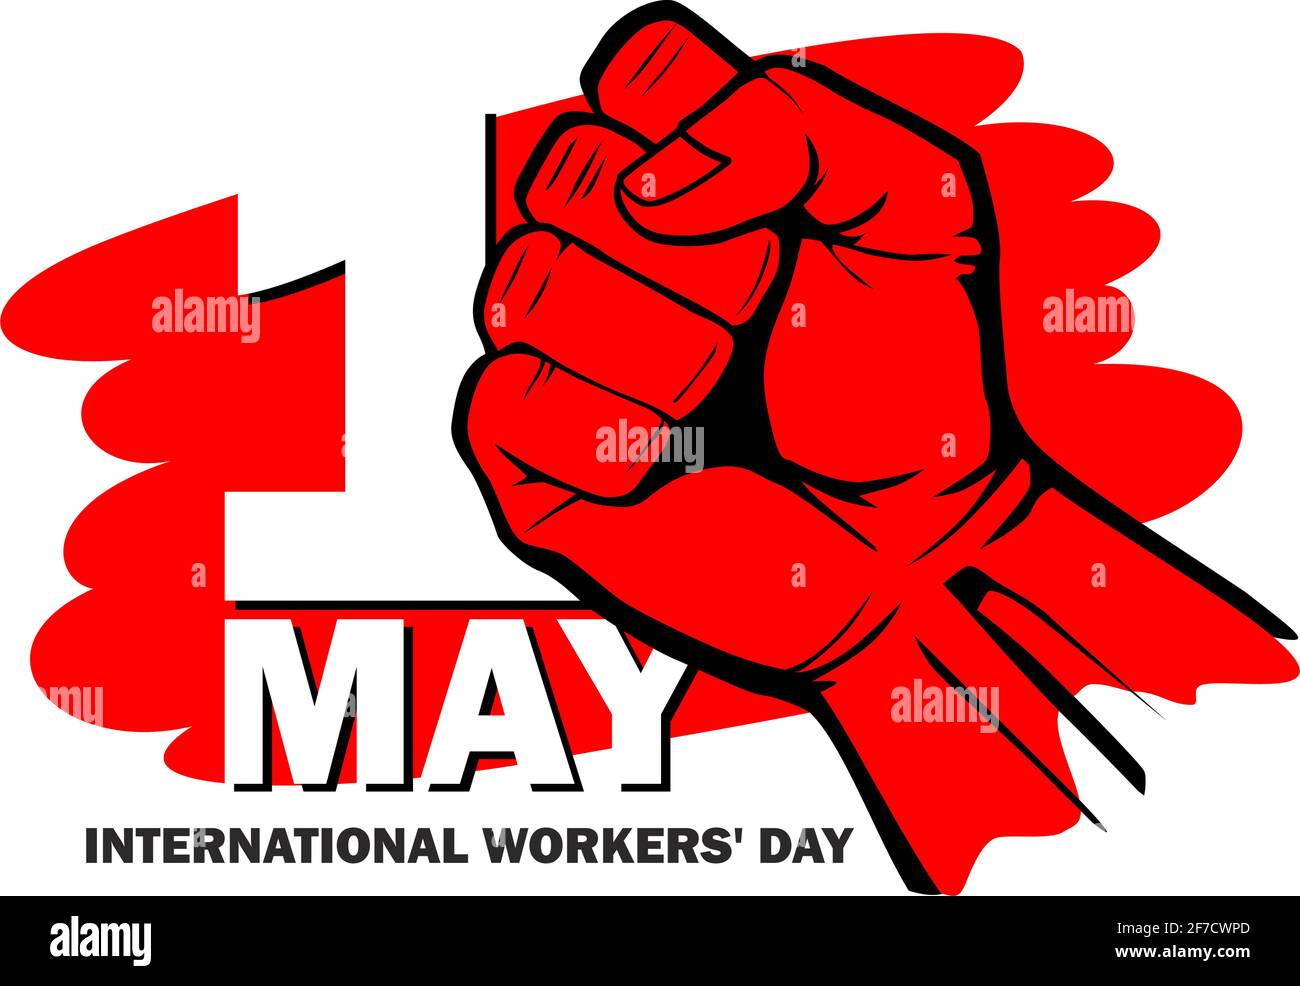 Grußkarte zum 1. Mai zum Internationalen Arbeitertag. 1. Mai - Symbol des revolutionären Protests ist rot geballte Faust angehoben. Abbildung, Vektor Stock Vektor